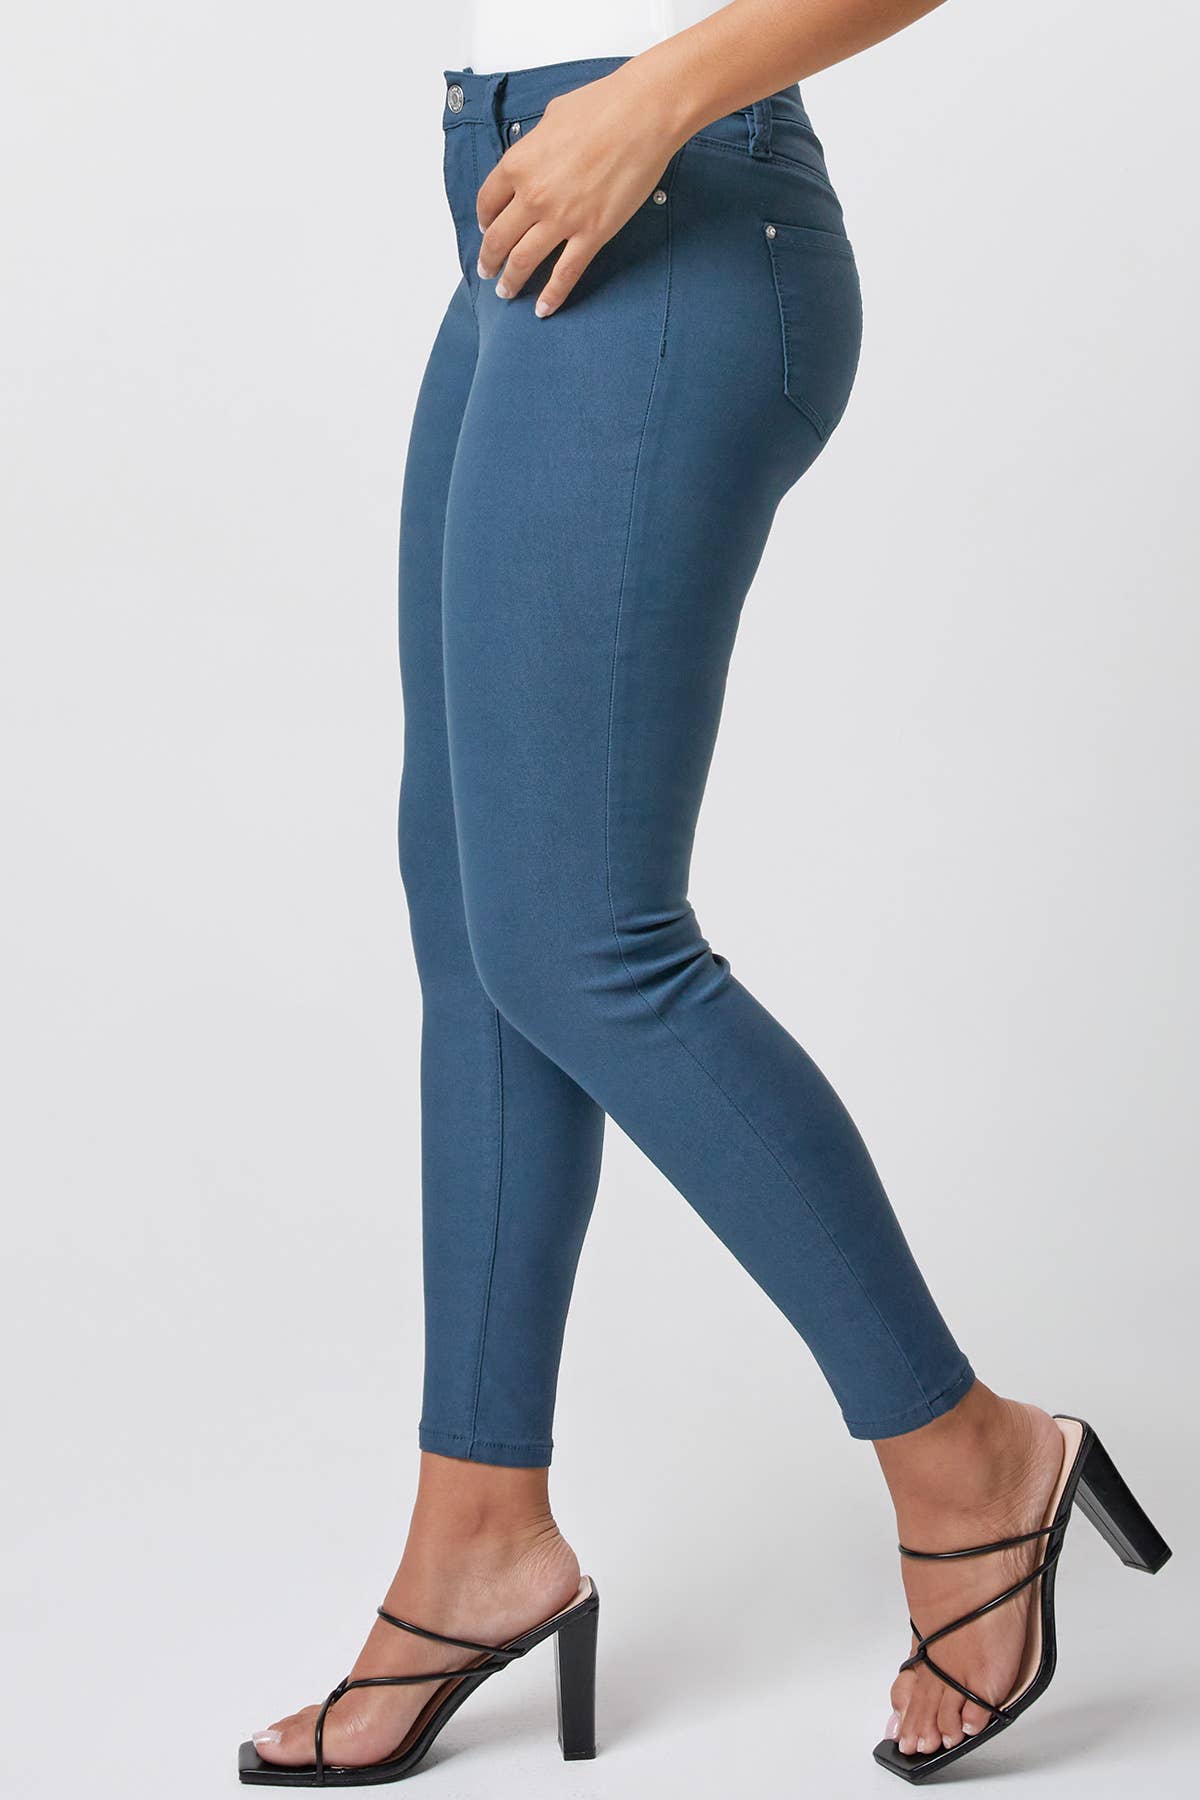 Junior Hyperstretch Mid-Rise Skinny Jean: Large / BLSTL-Blue STeel